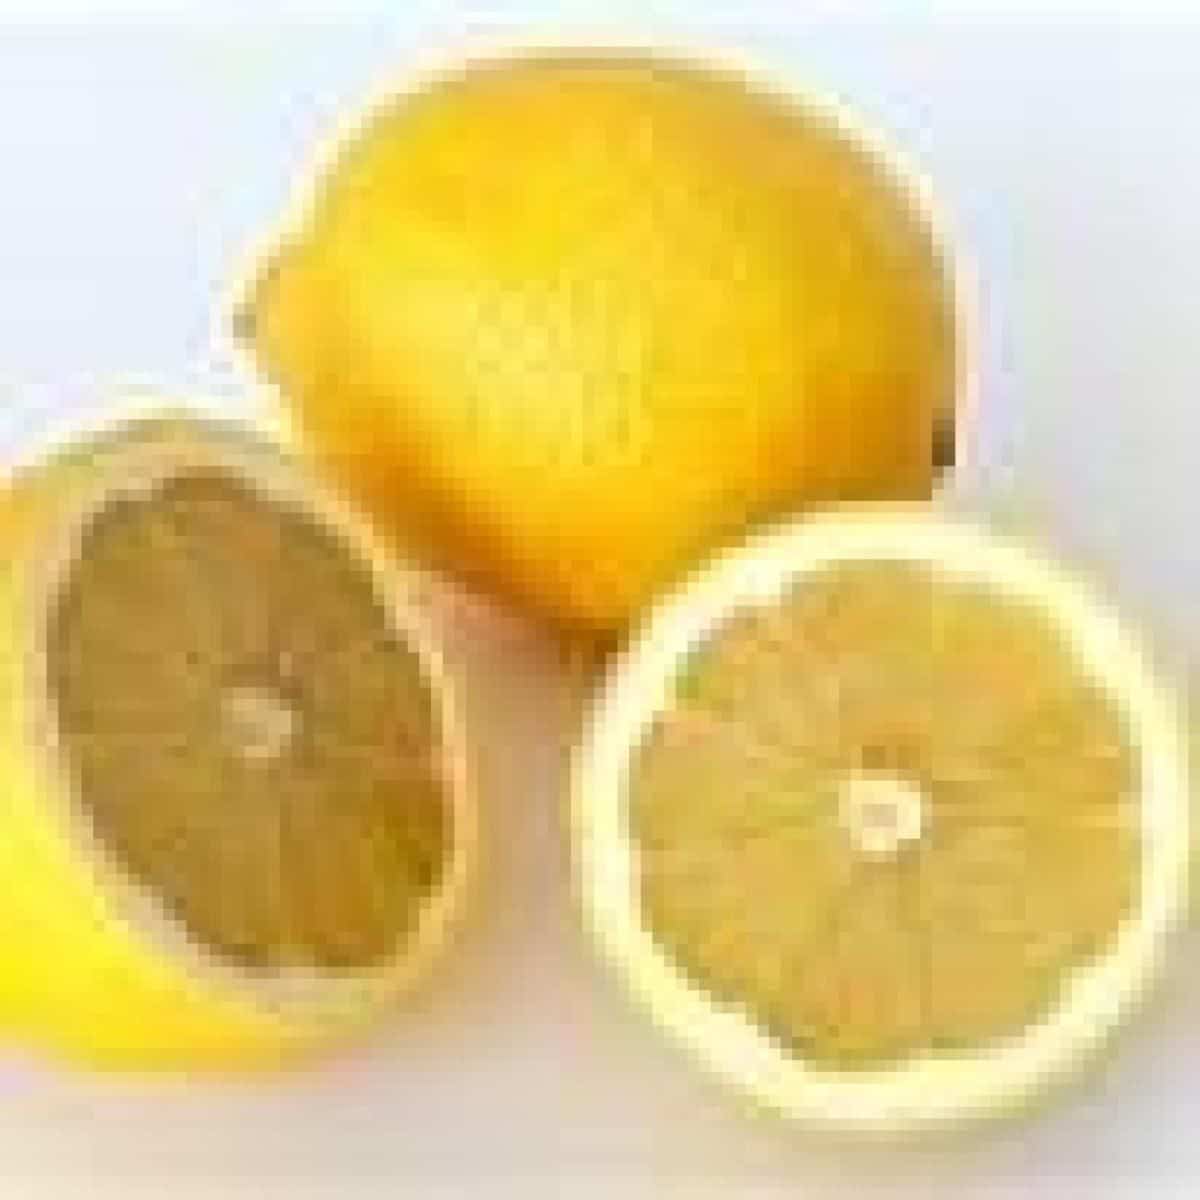 The amazing frozen lemon